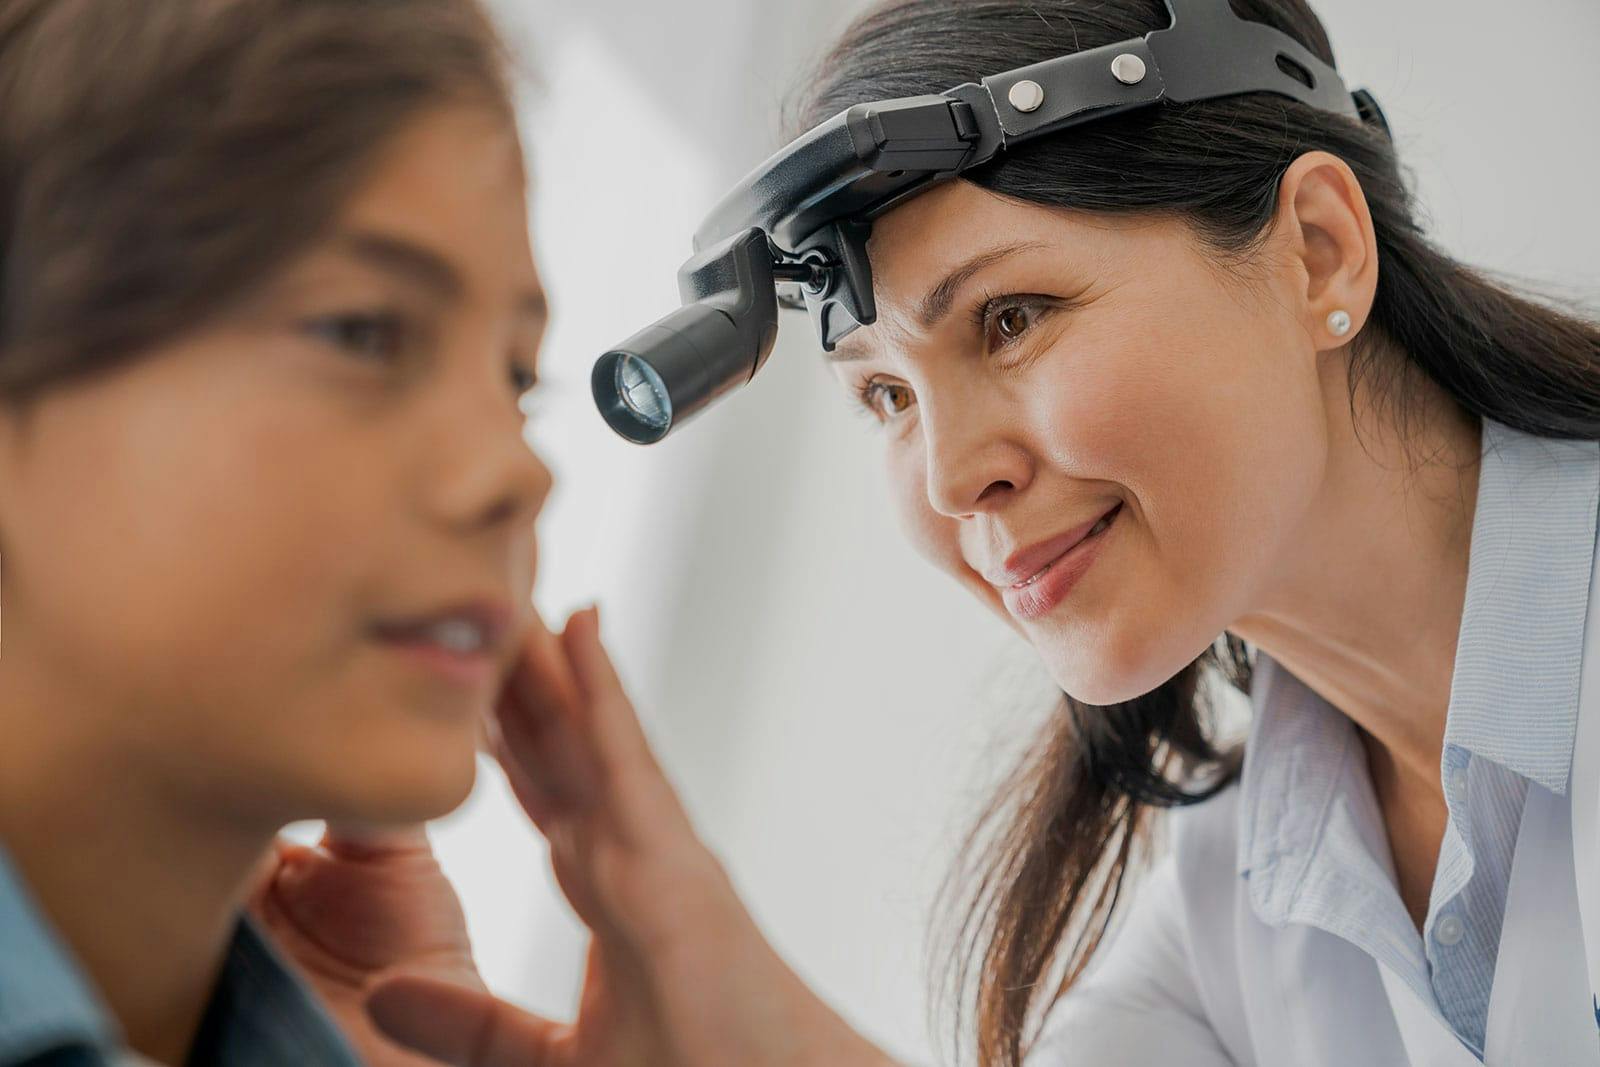 Provider examining at a child's ears